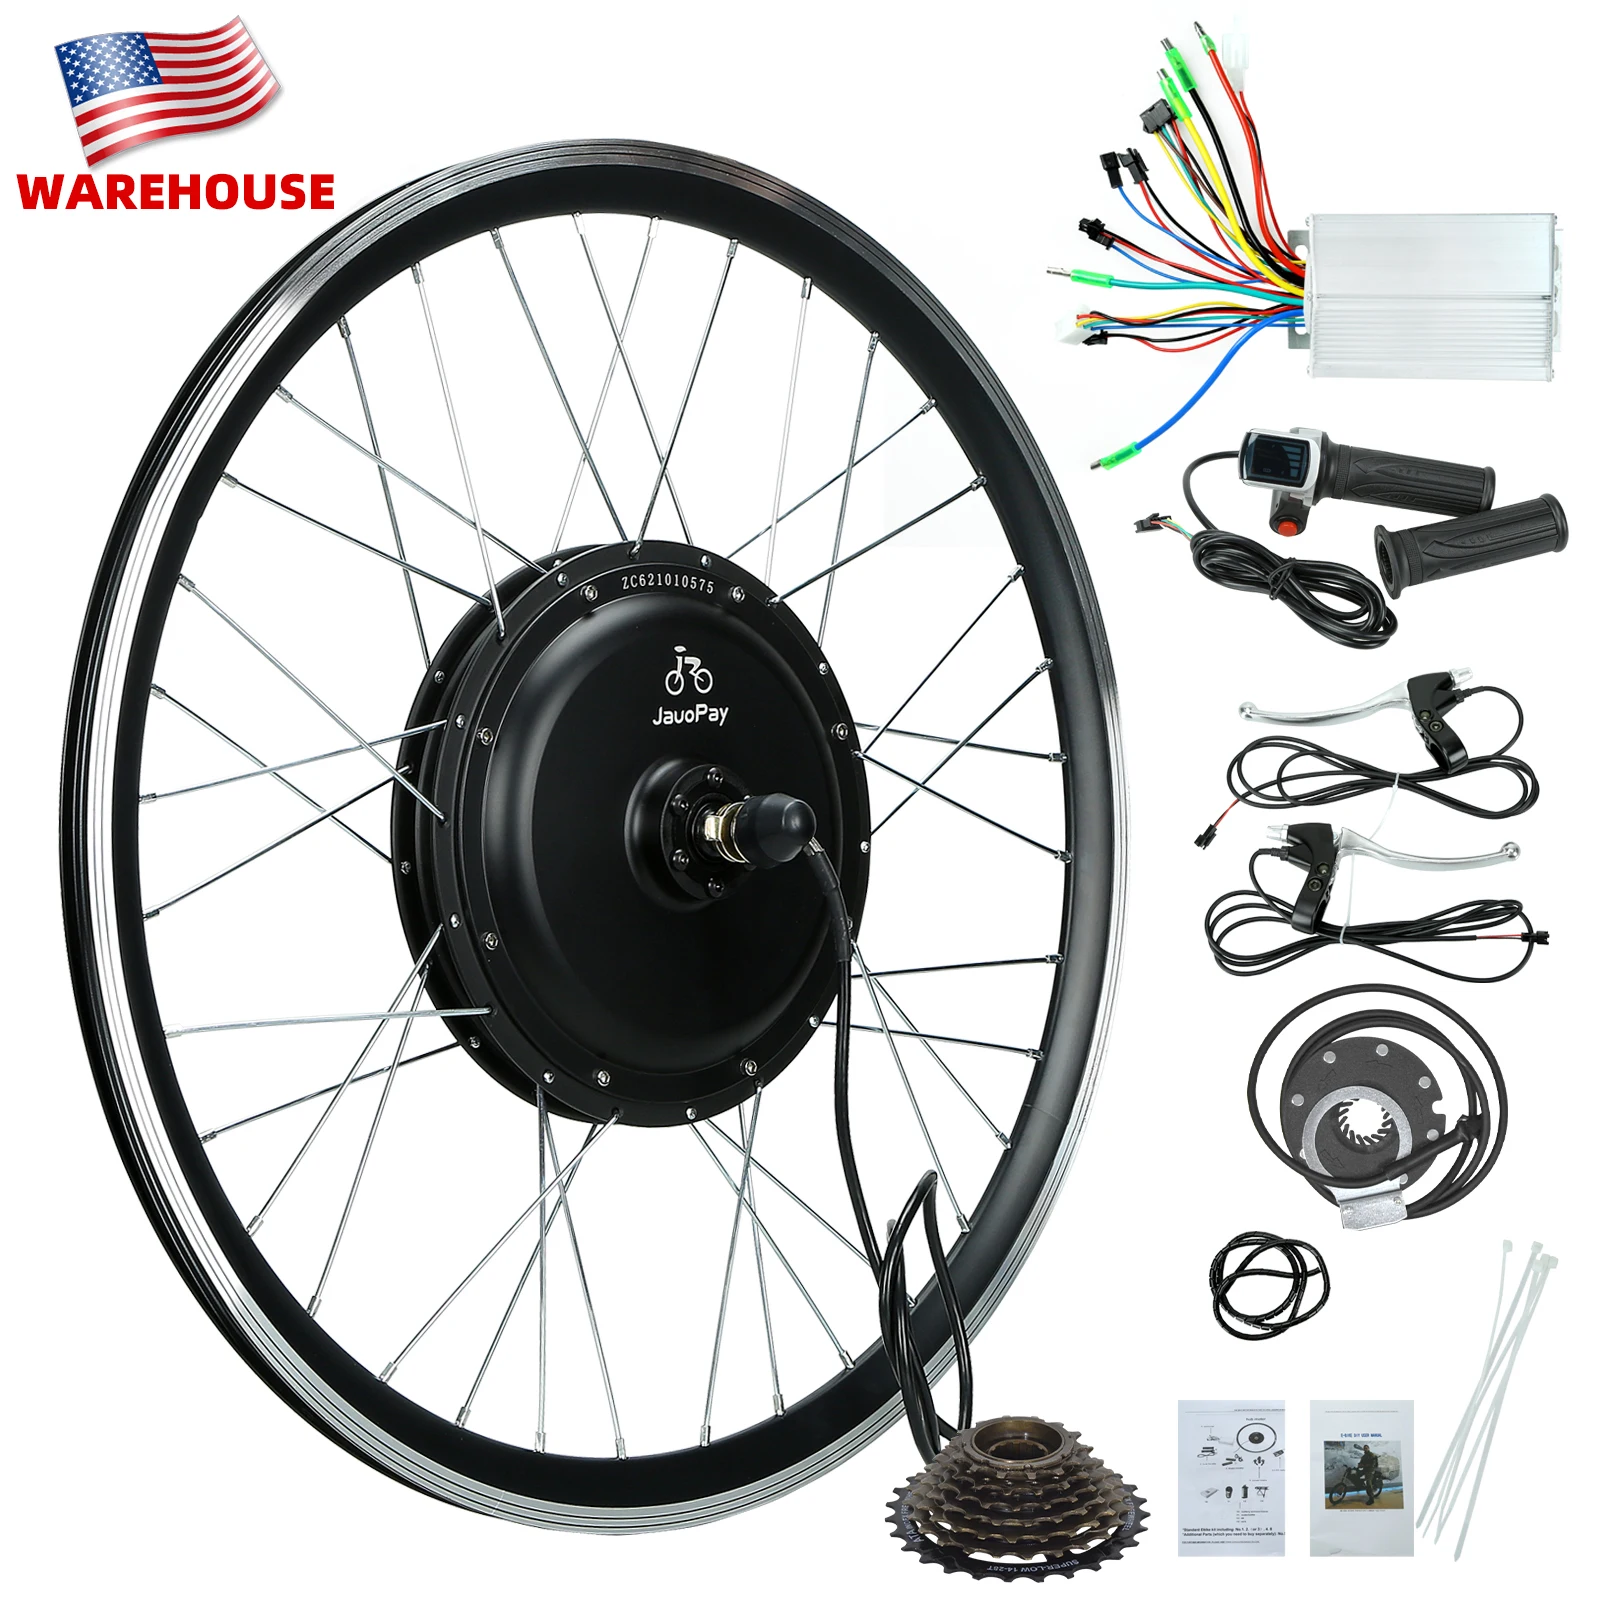 

USA warehouse 4 wheel bike kit top 5 60v electric bicycle kits